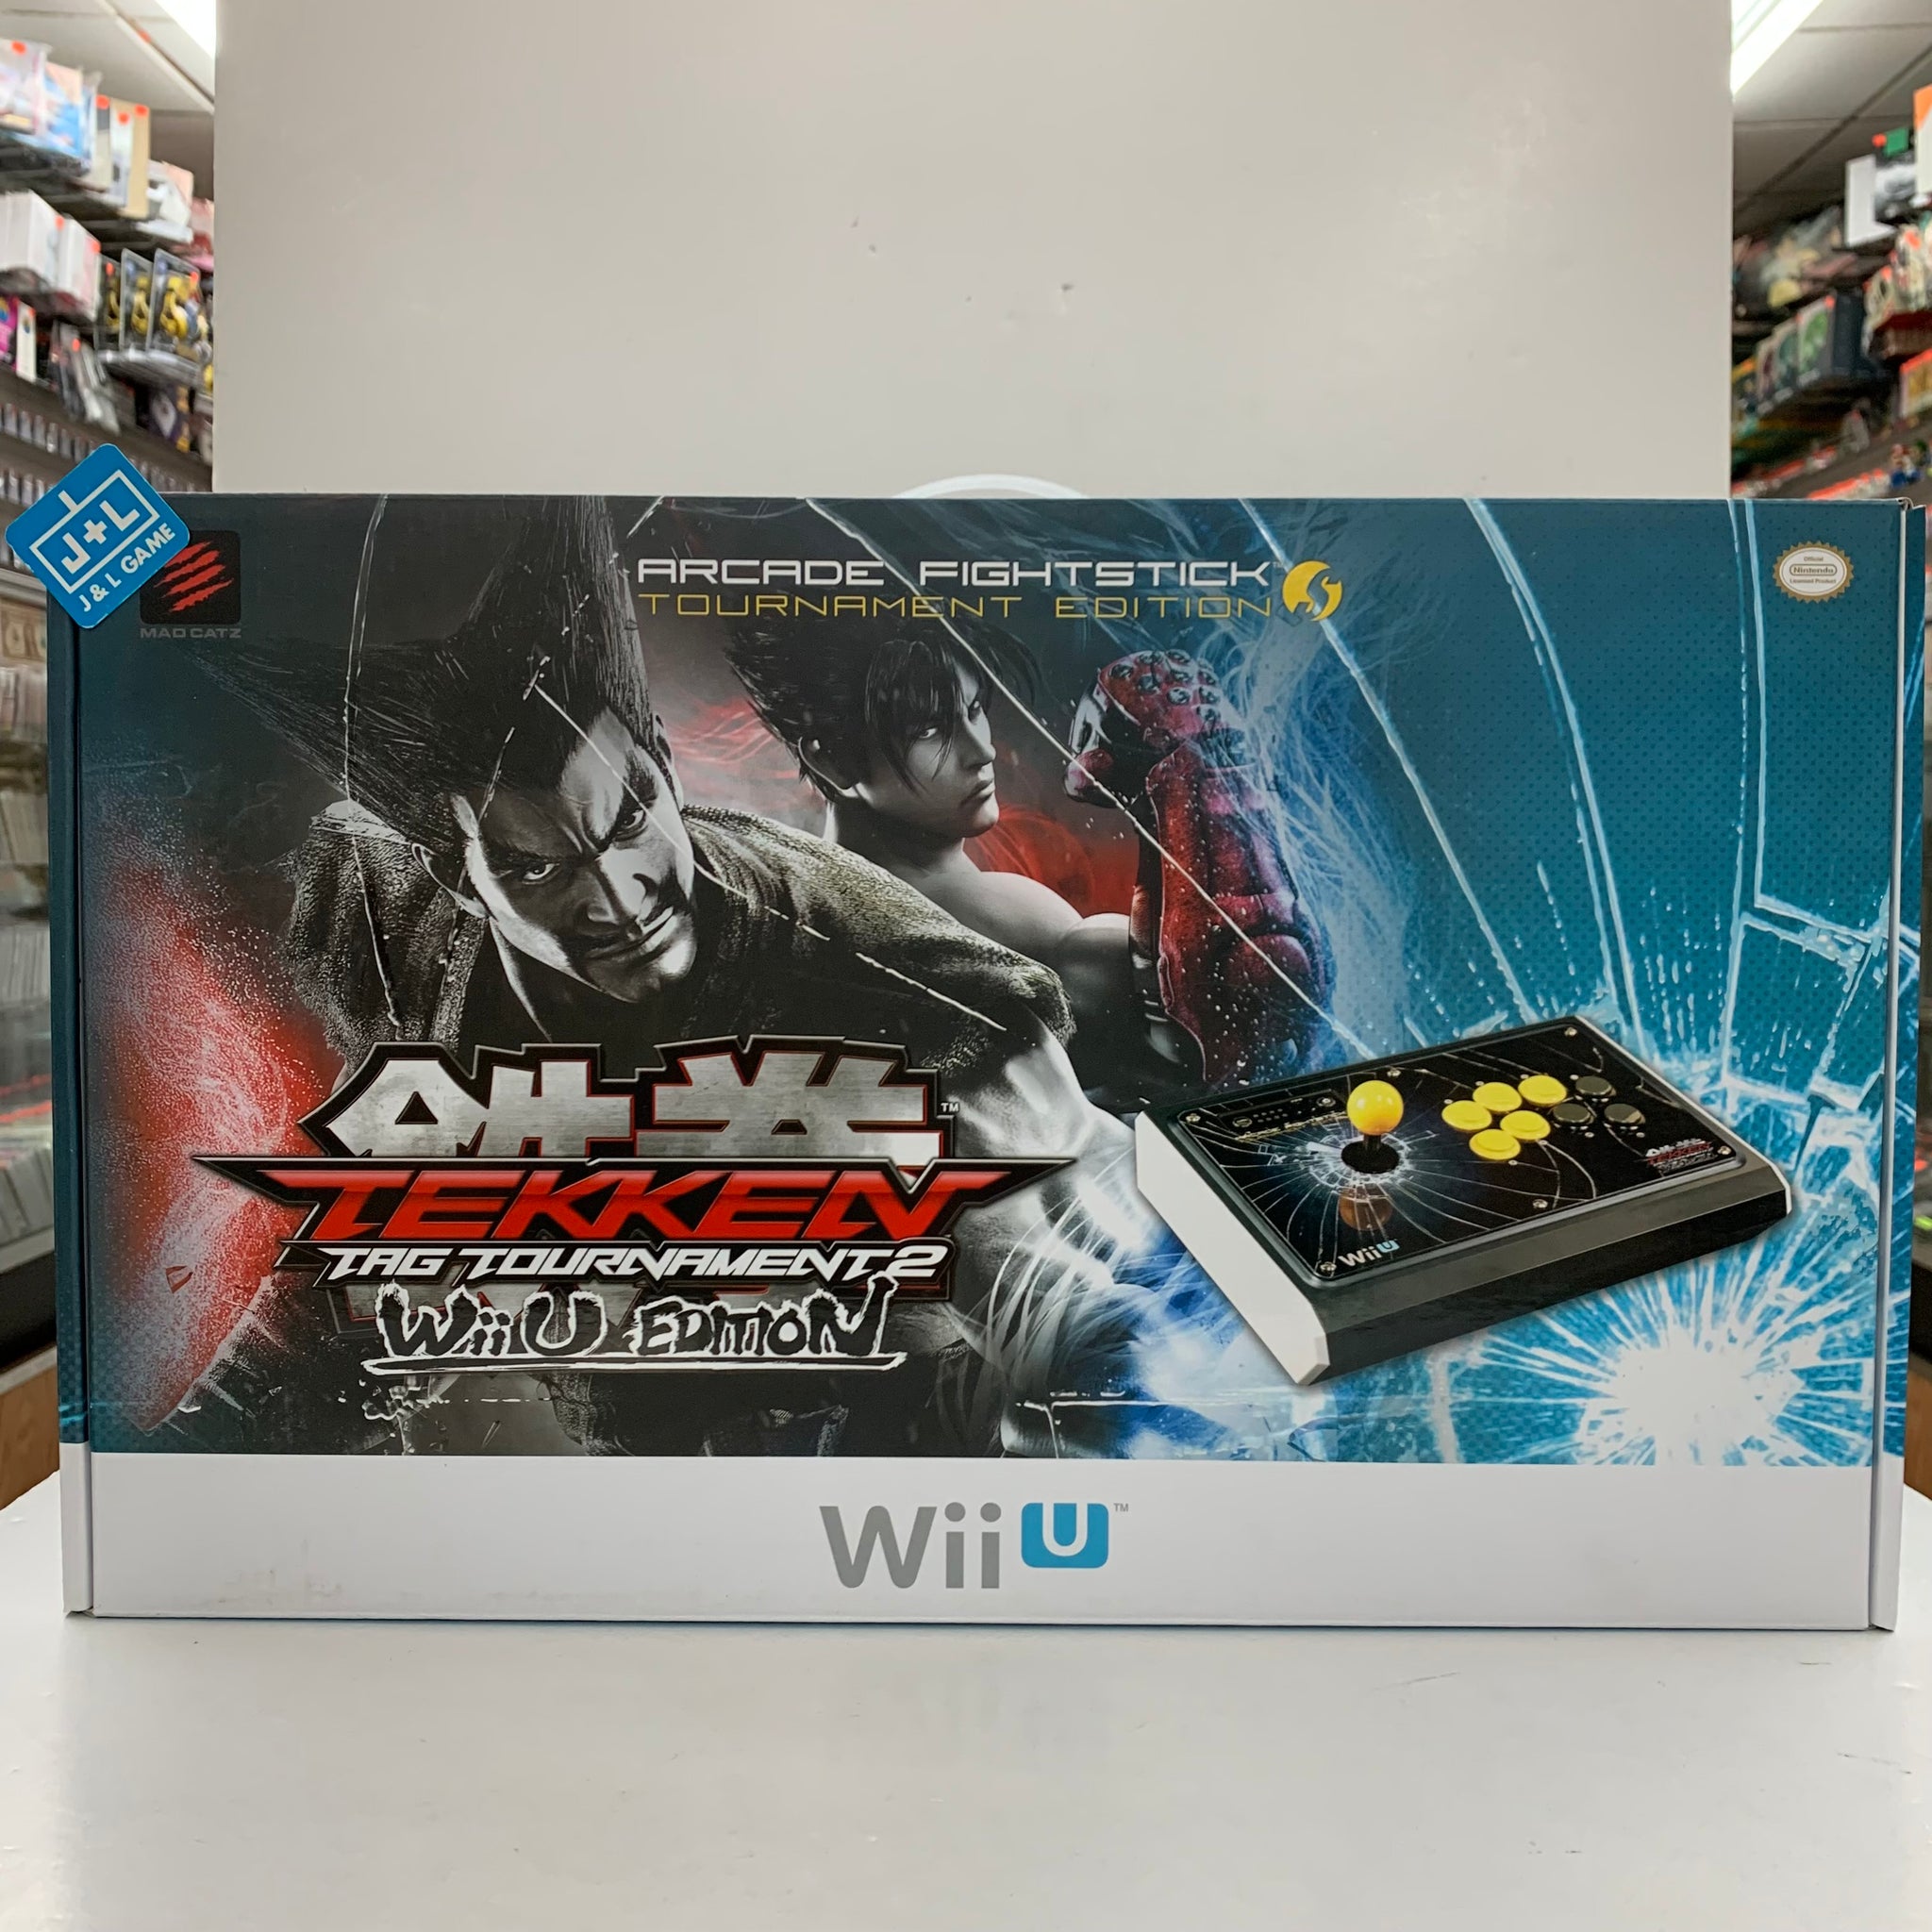 Tekken 4 5 Tag Tournament Action Namco Game 3 set of games PlayStation PS2  Japan